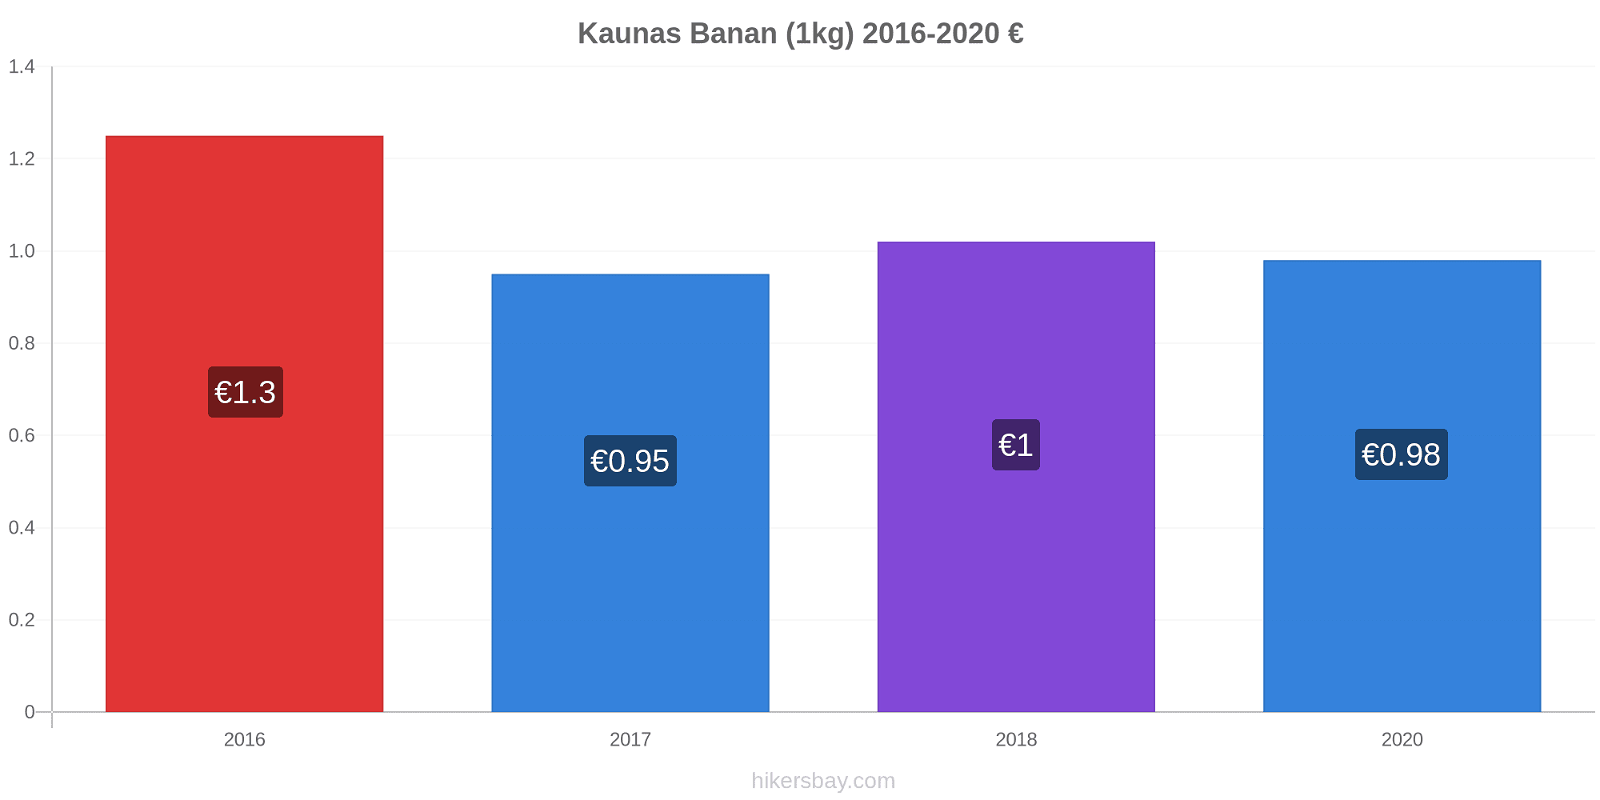 Kaunas prisendringer Banan (1kg) hikersbay.com